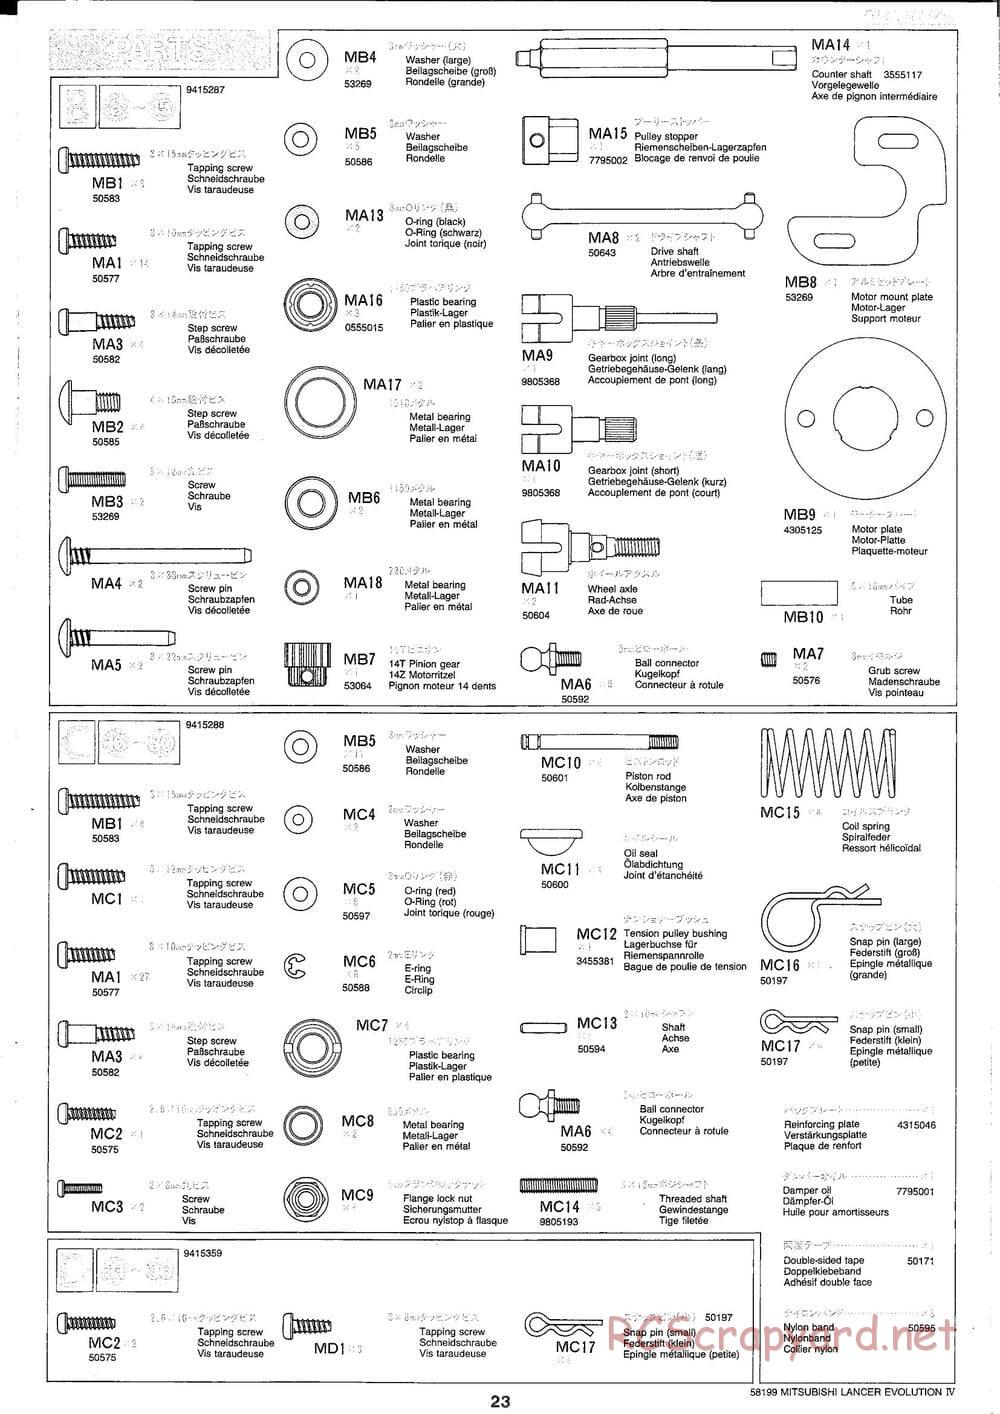 Tamiya - Mitsubishi Lancer Evolution IV - TA-03F Chassis - Manual - Page 23